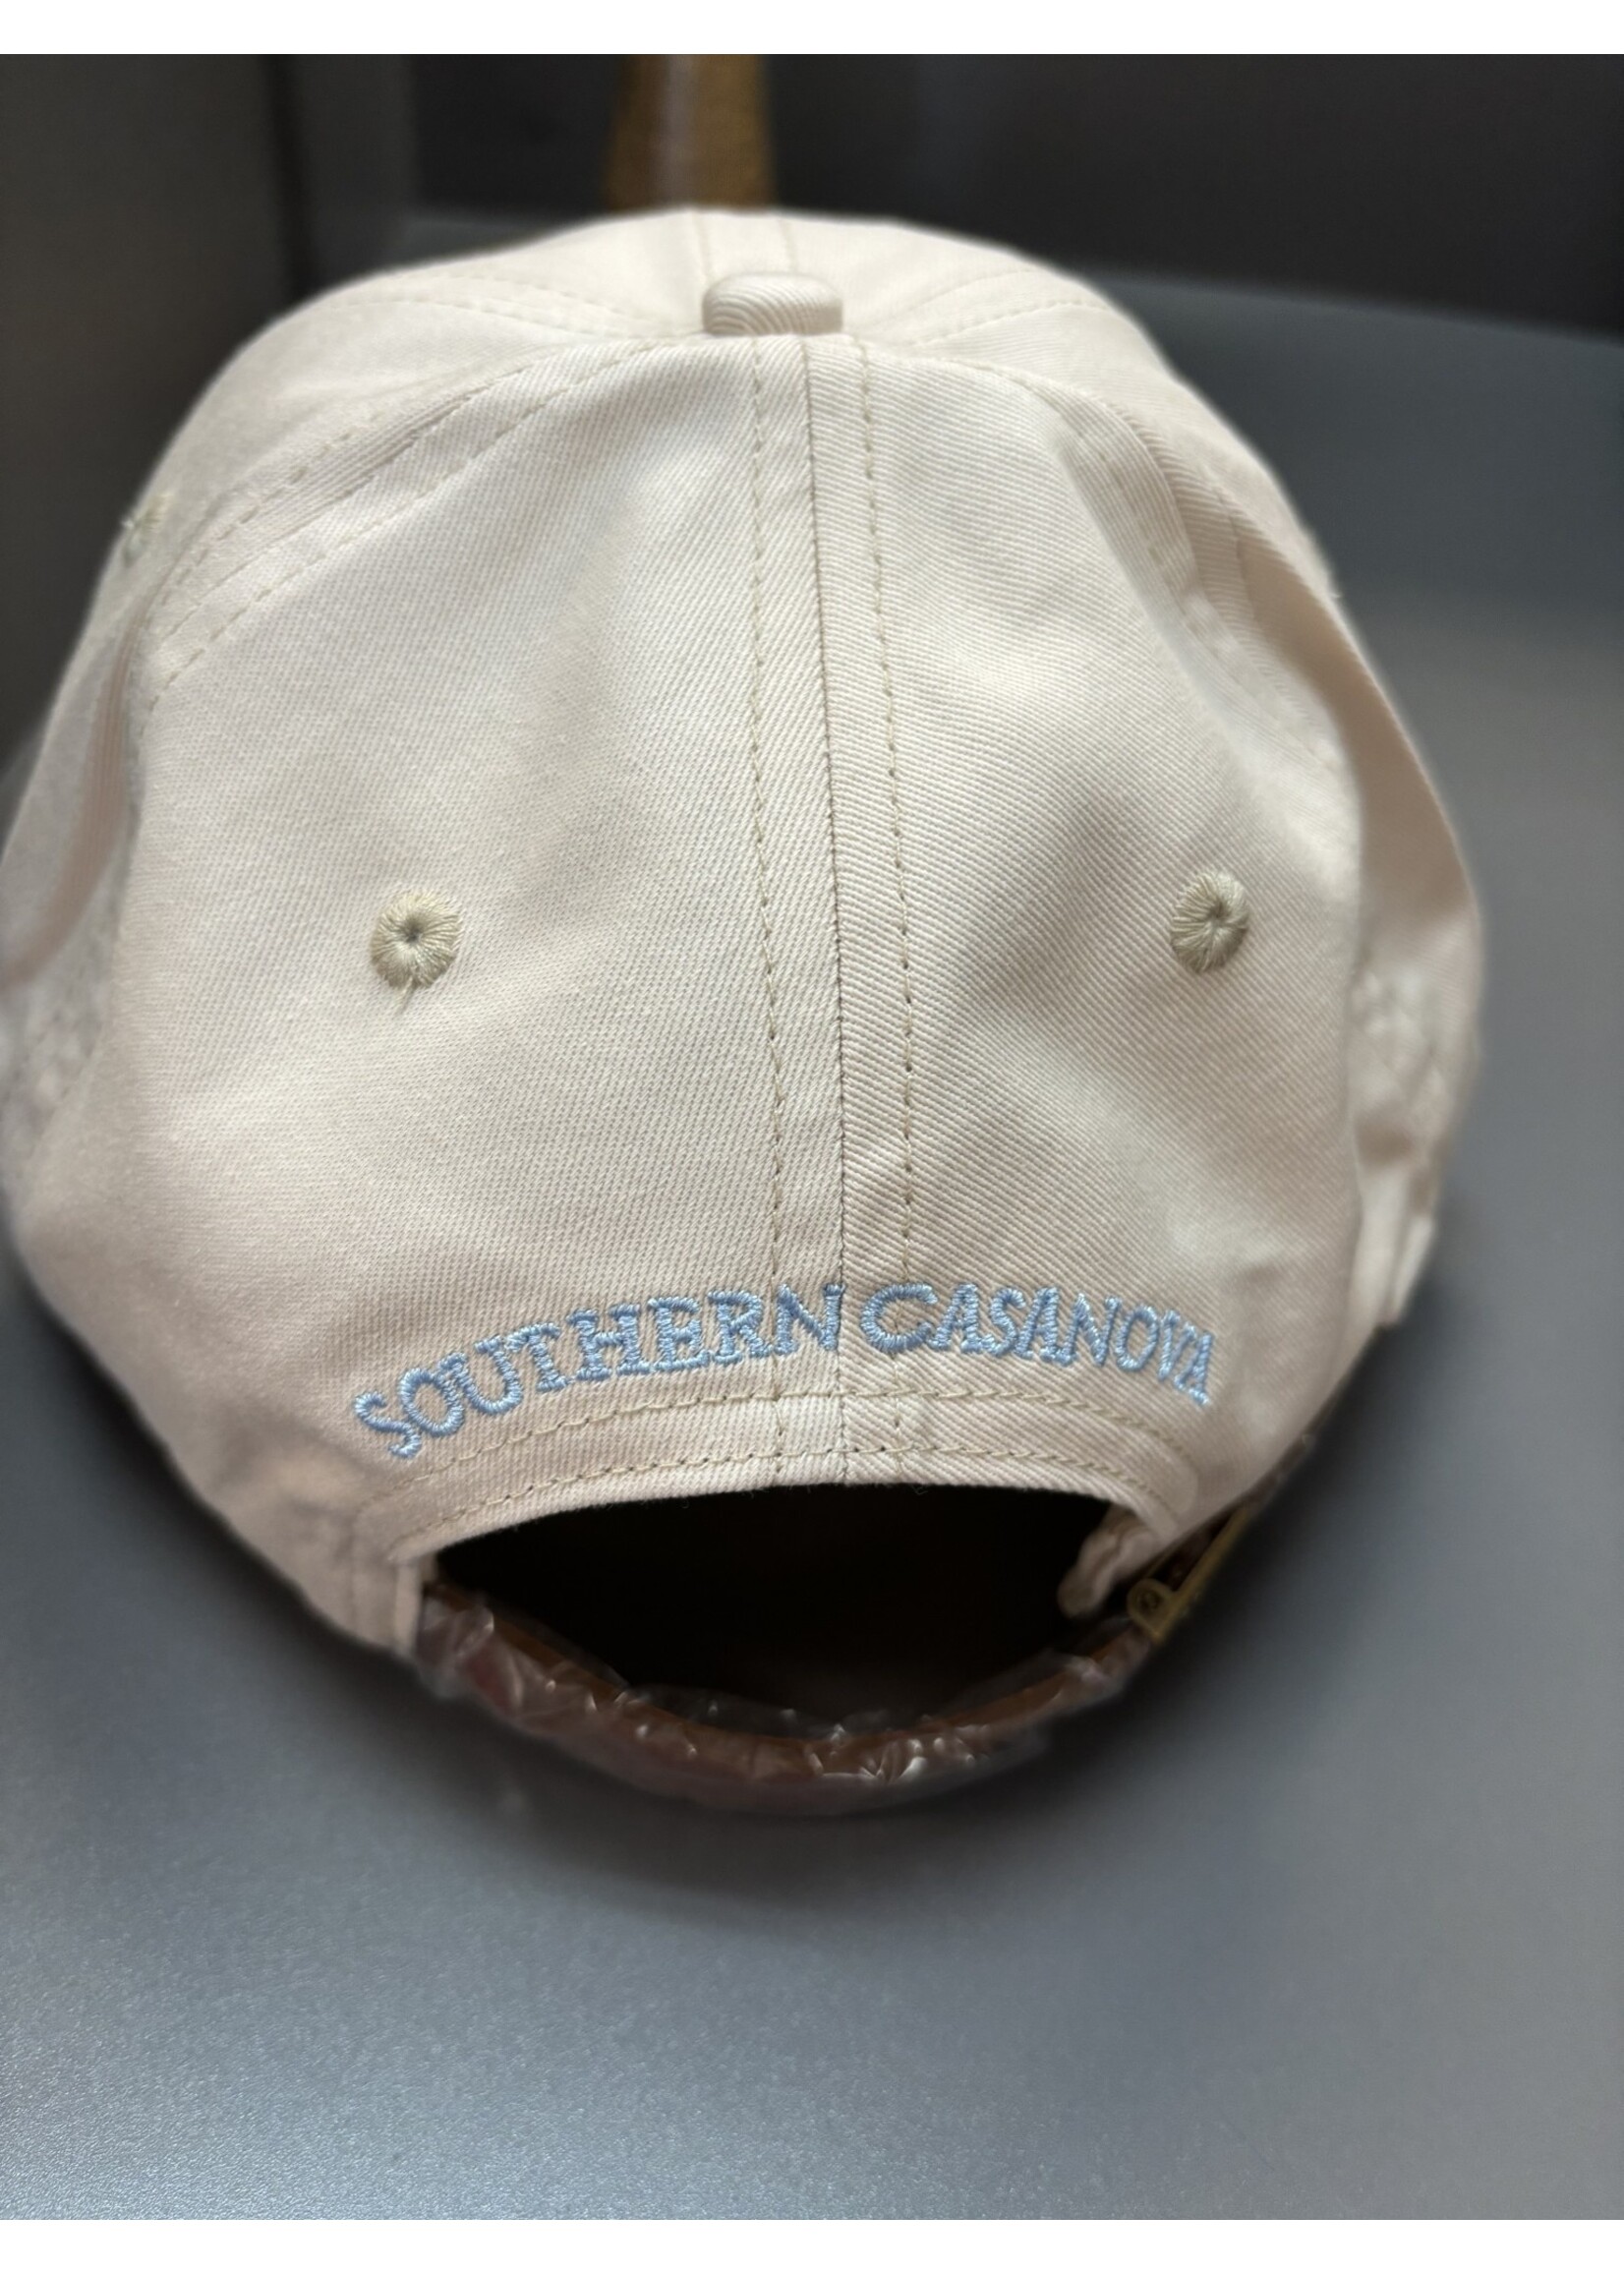 Southern Casanova Signature Hats